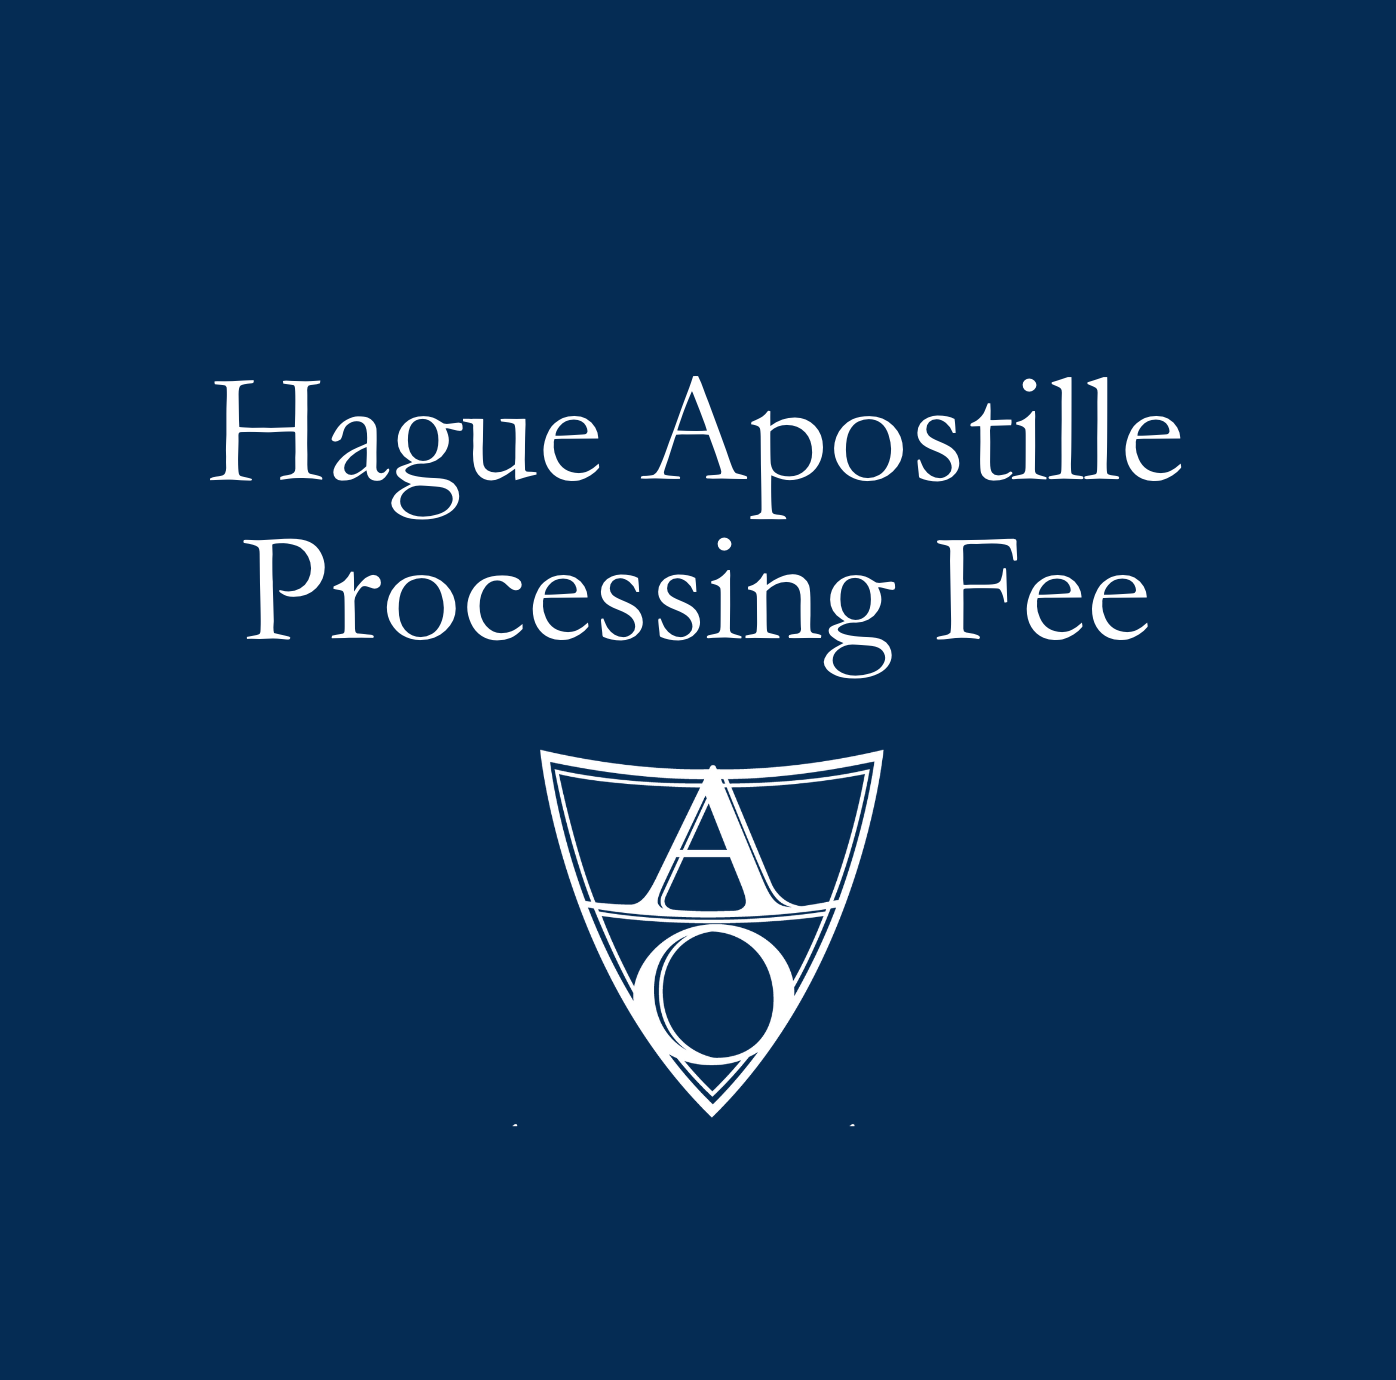 Hague Apostille Processing Fee